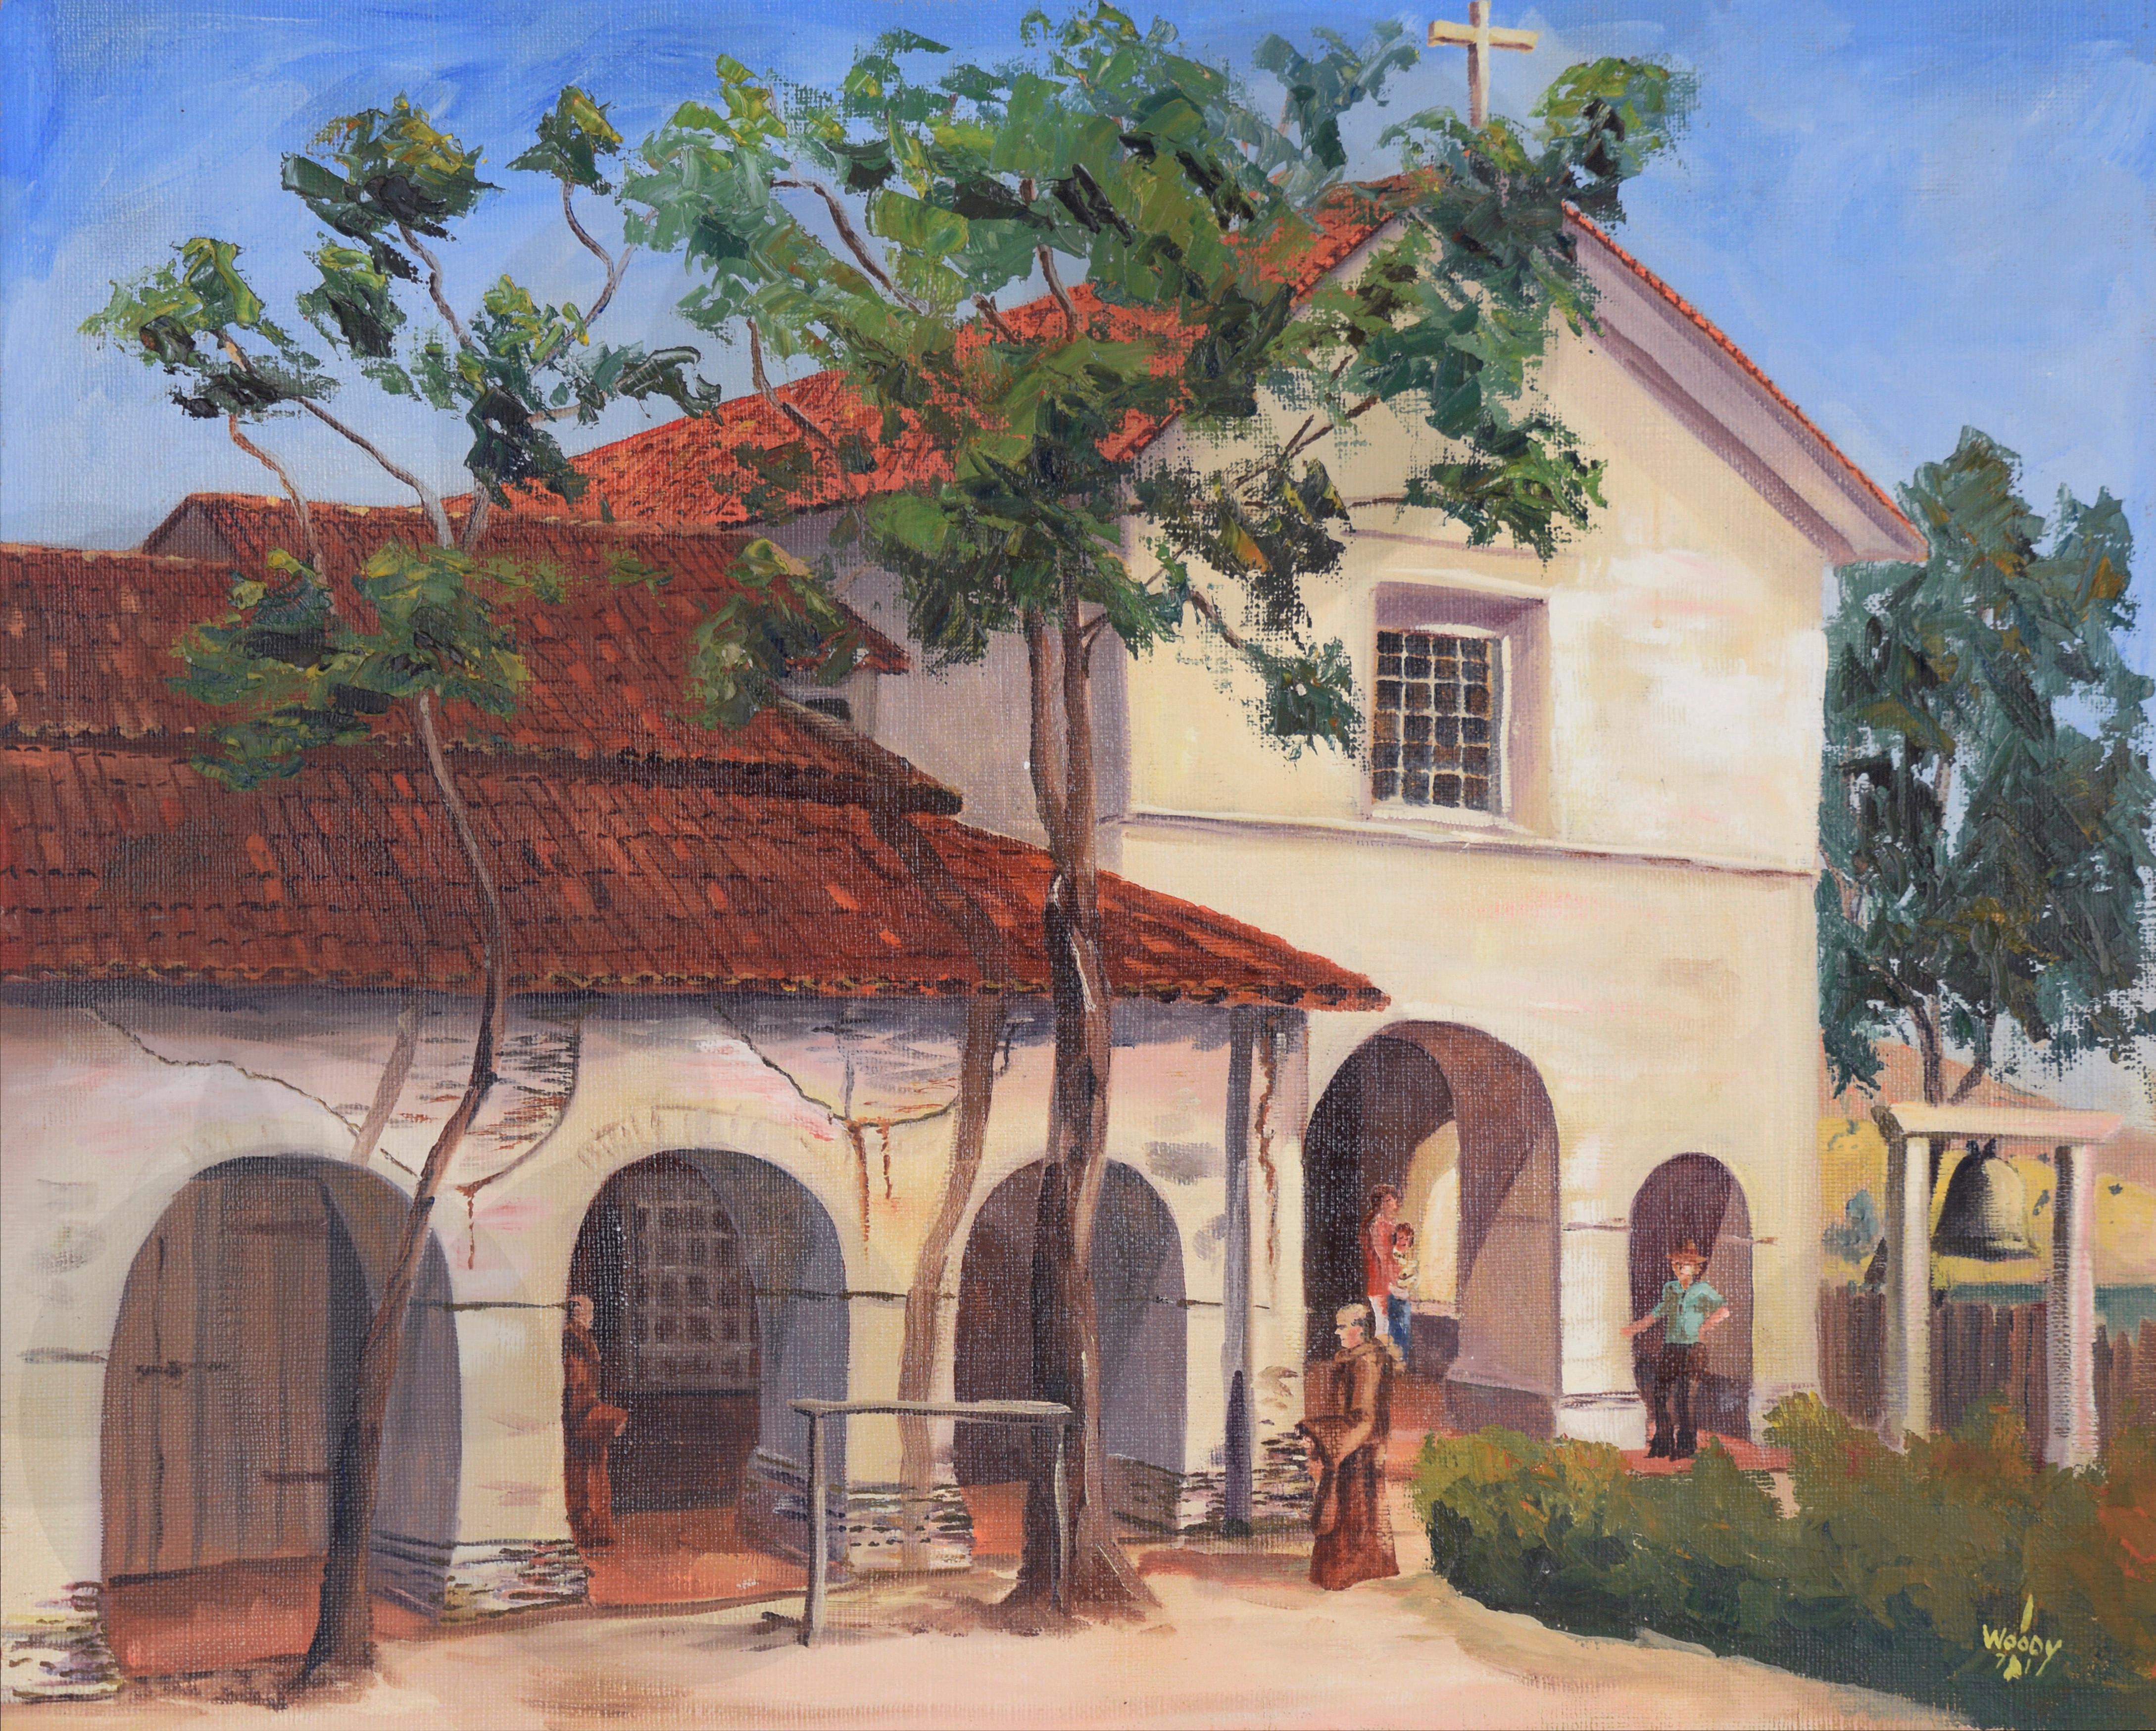 Gorman Woody Figurative Painting - Mission San Juan Bautista, 1971 - Original Oil Painting